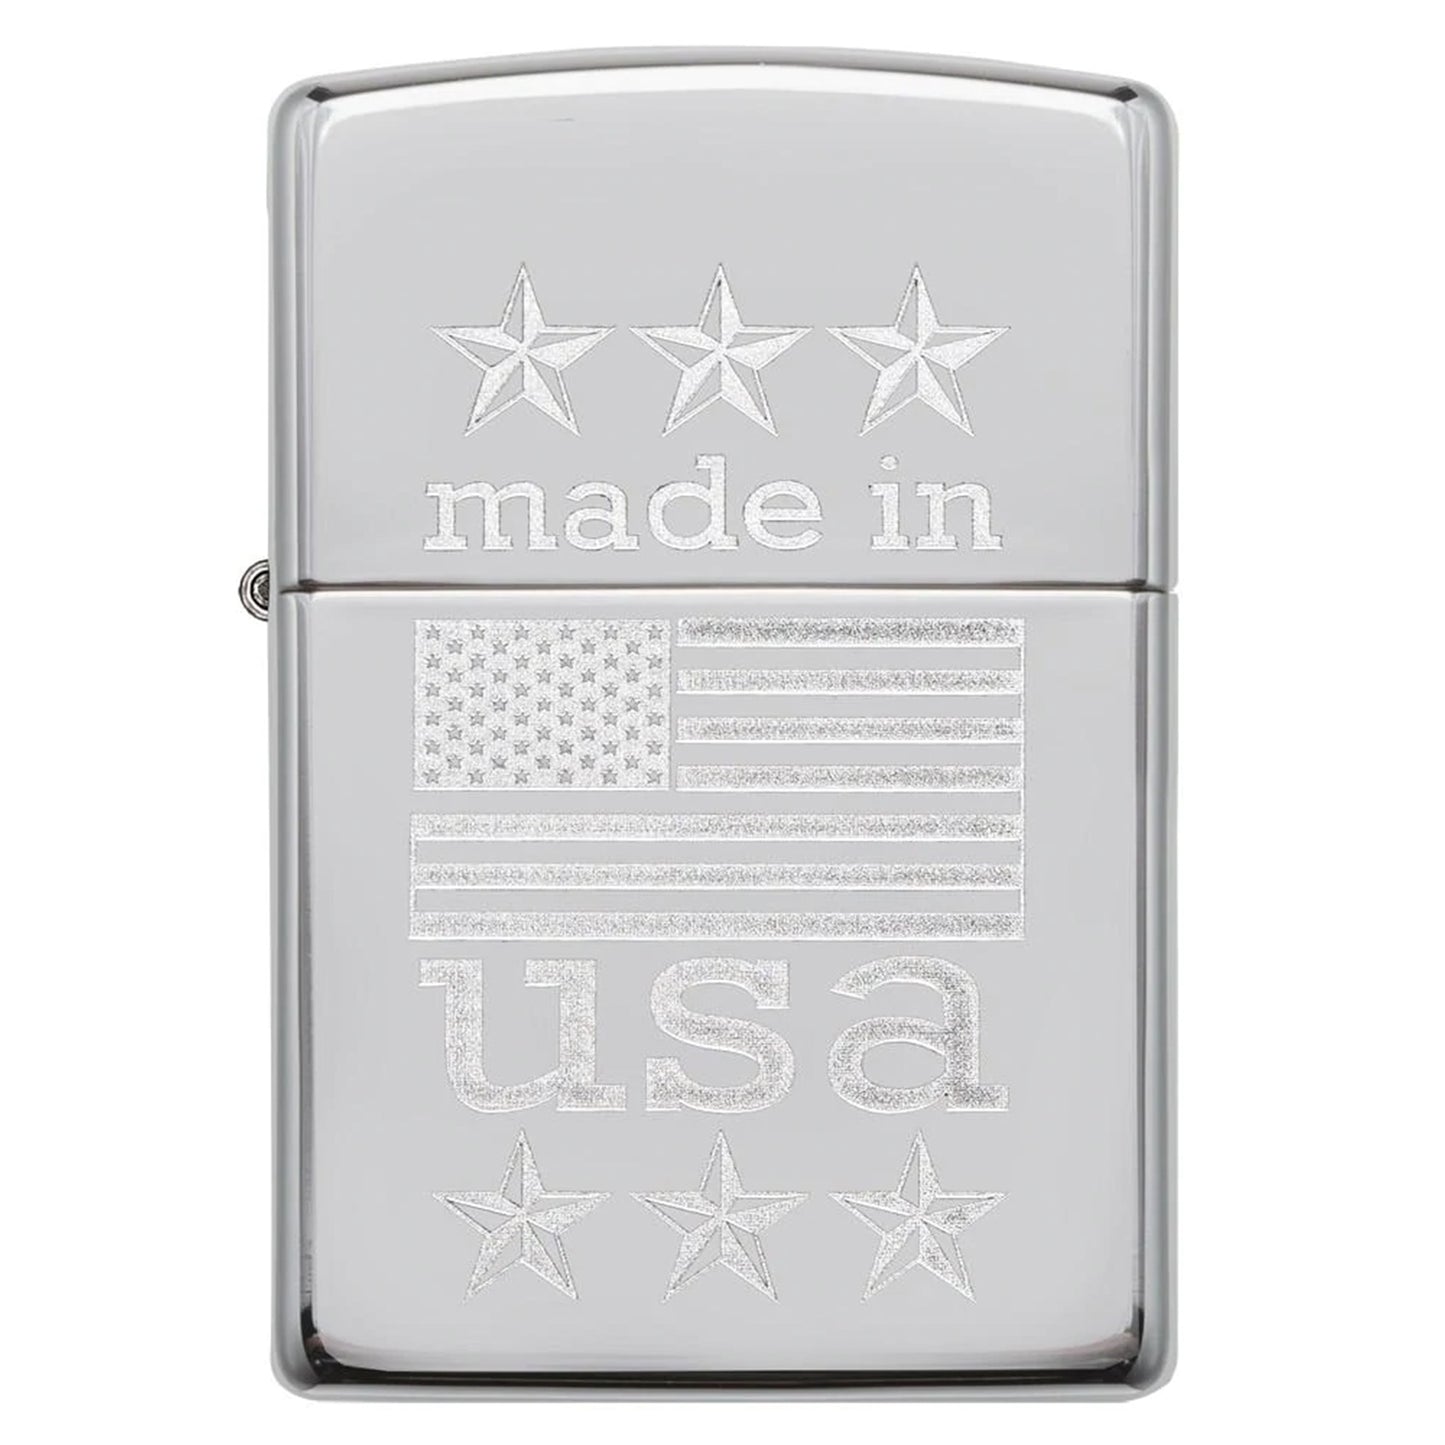 Zippo Made in USA Lighter #29